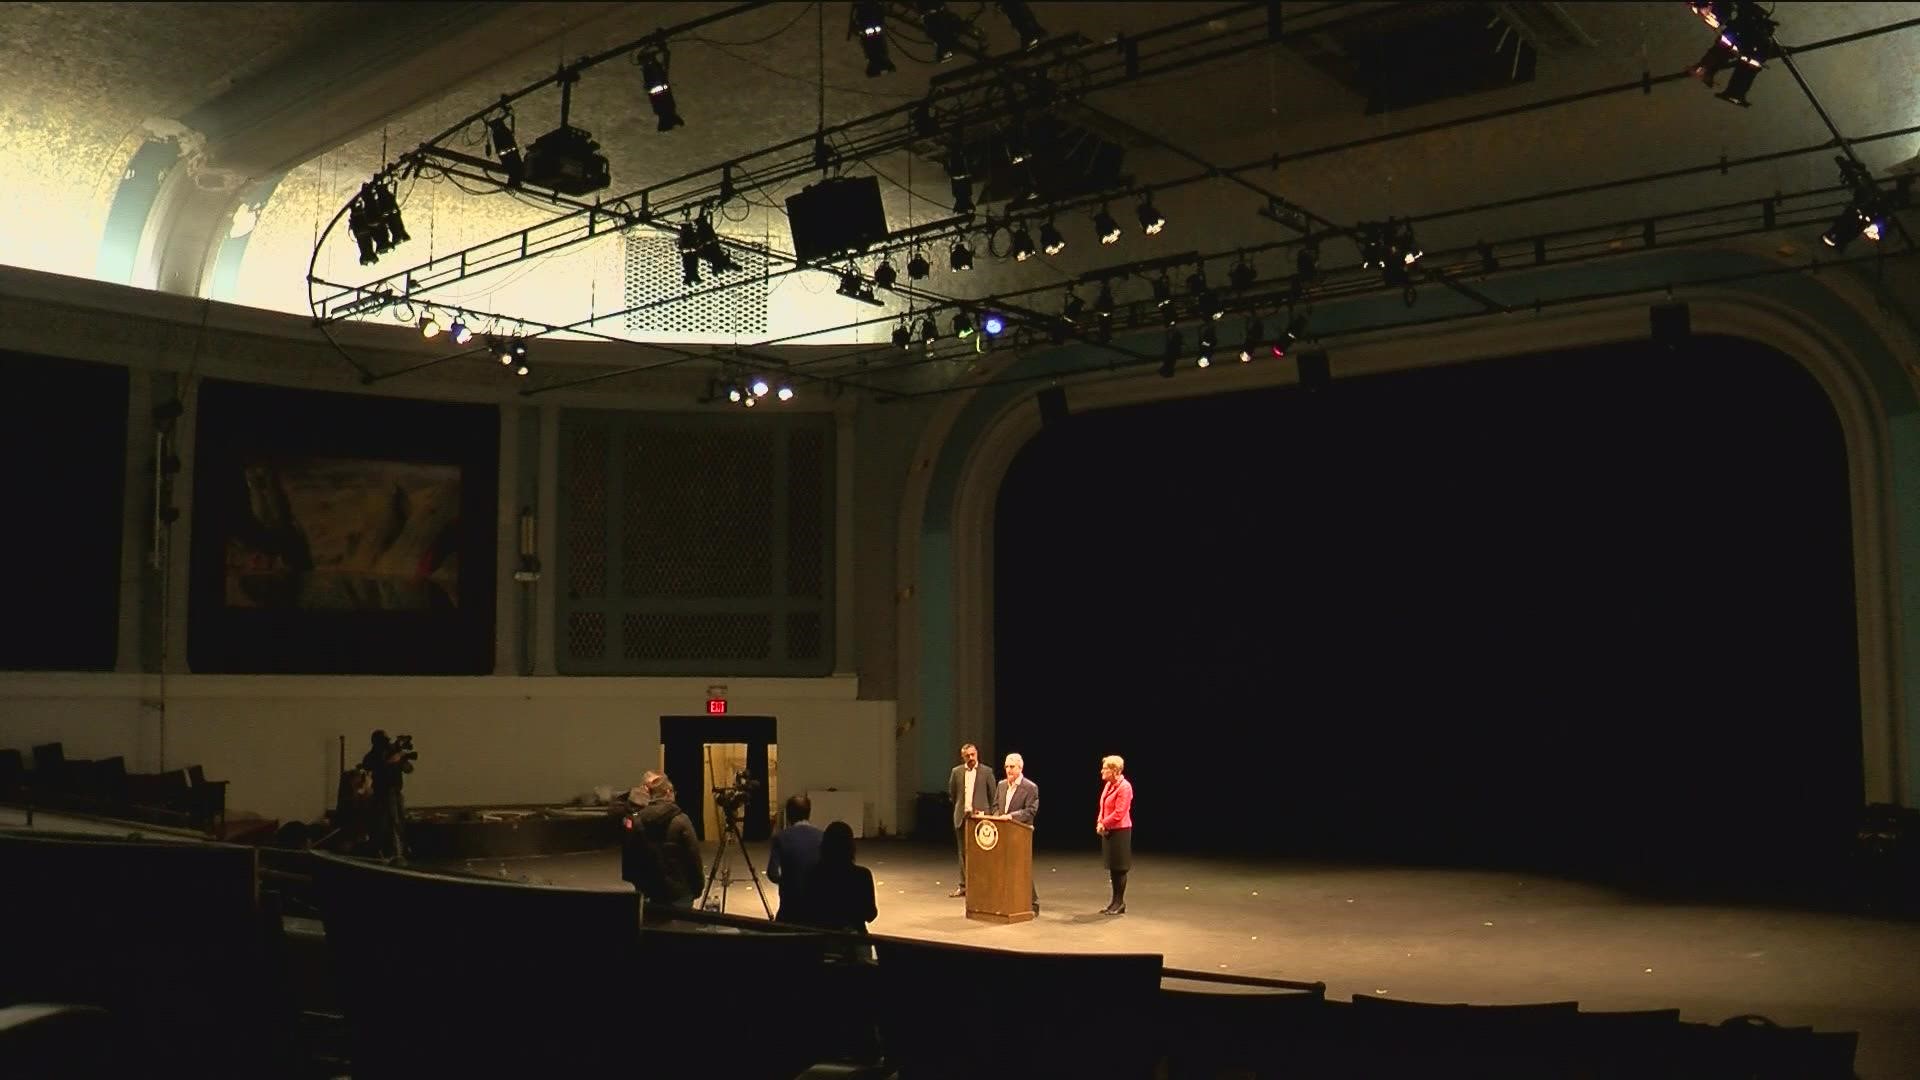 The historic Ohio Theatre on Lagrange Street will soon undergo $2.5 million in renovations. North Toledoans recall growing up with the community staple.